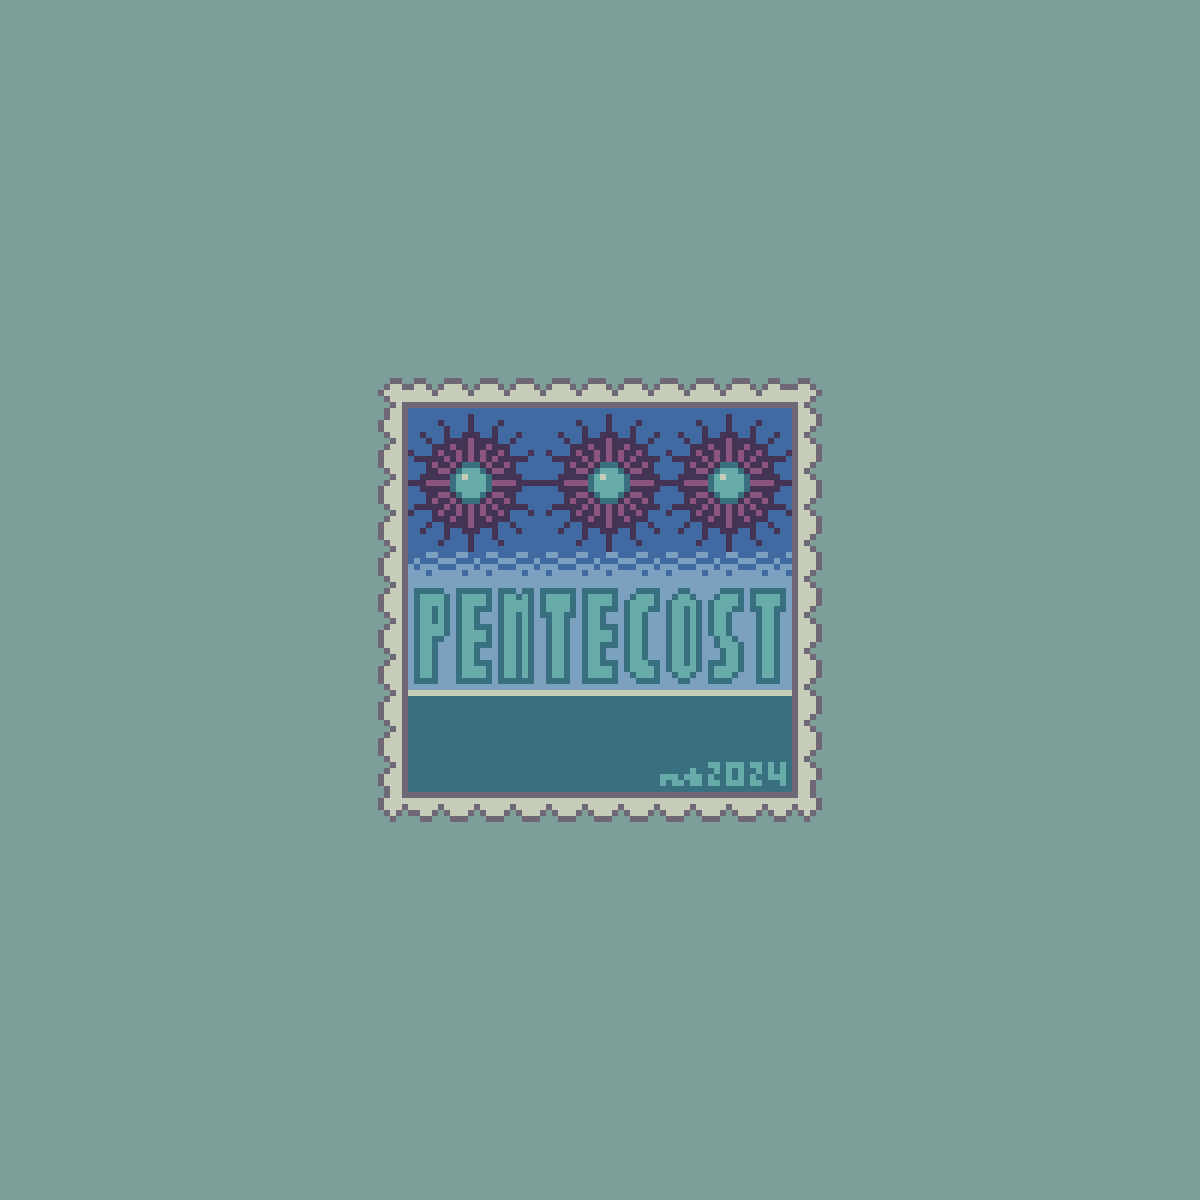 pixel art illustrating pentecost as a stamp